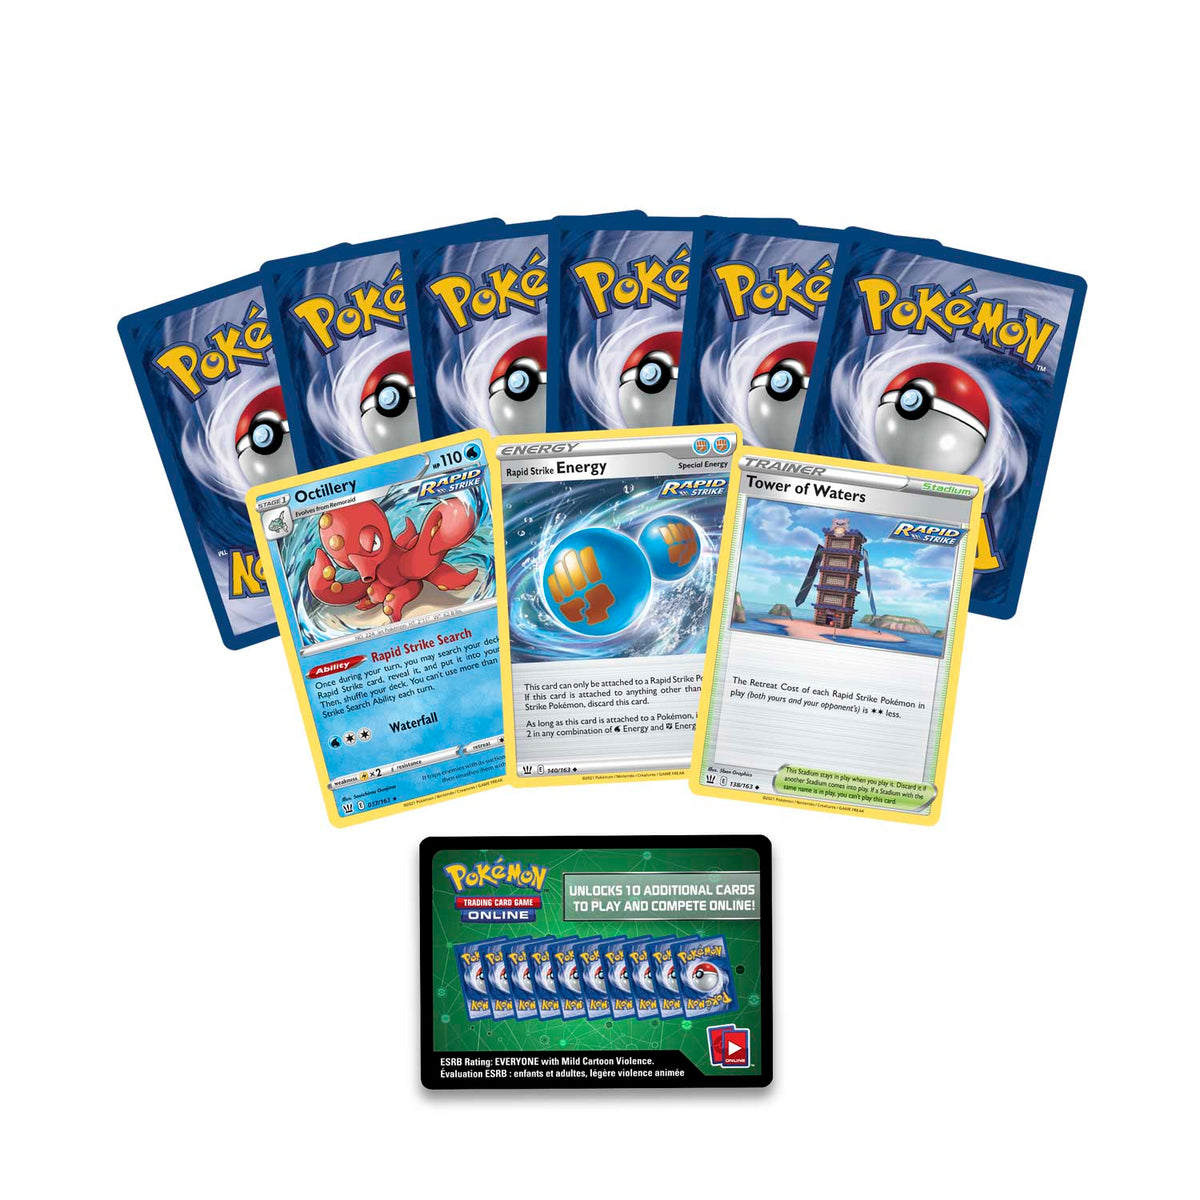 Pokémon TCG: Rapid Strike Urshifu VMAX League Battle Deck-The Pokémon Company International-Ace Cards &amp; Collectibles